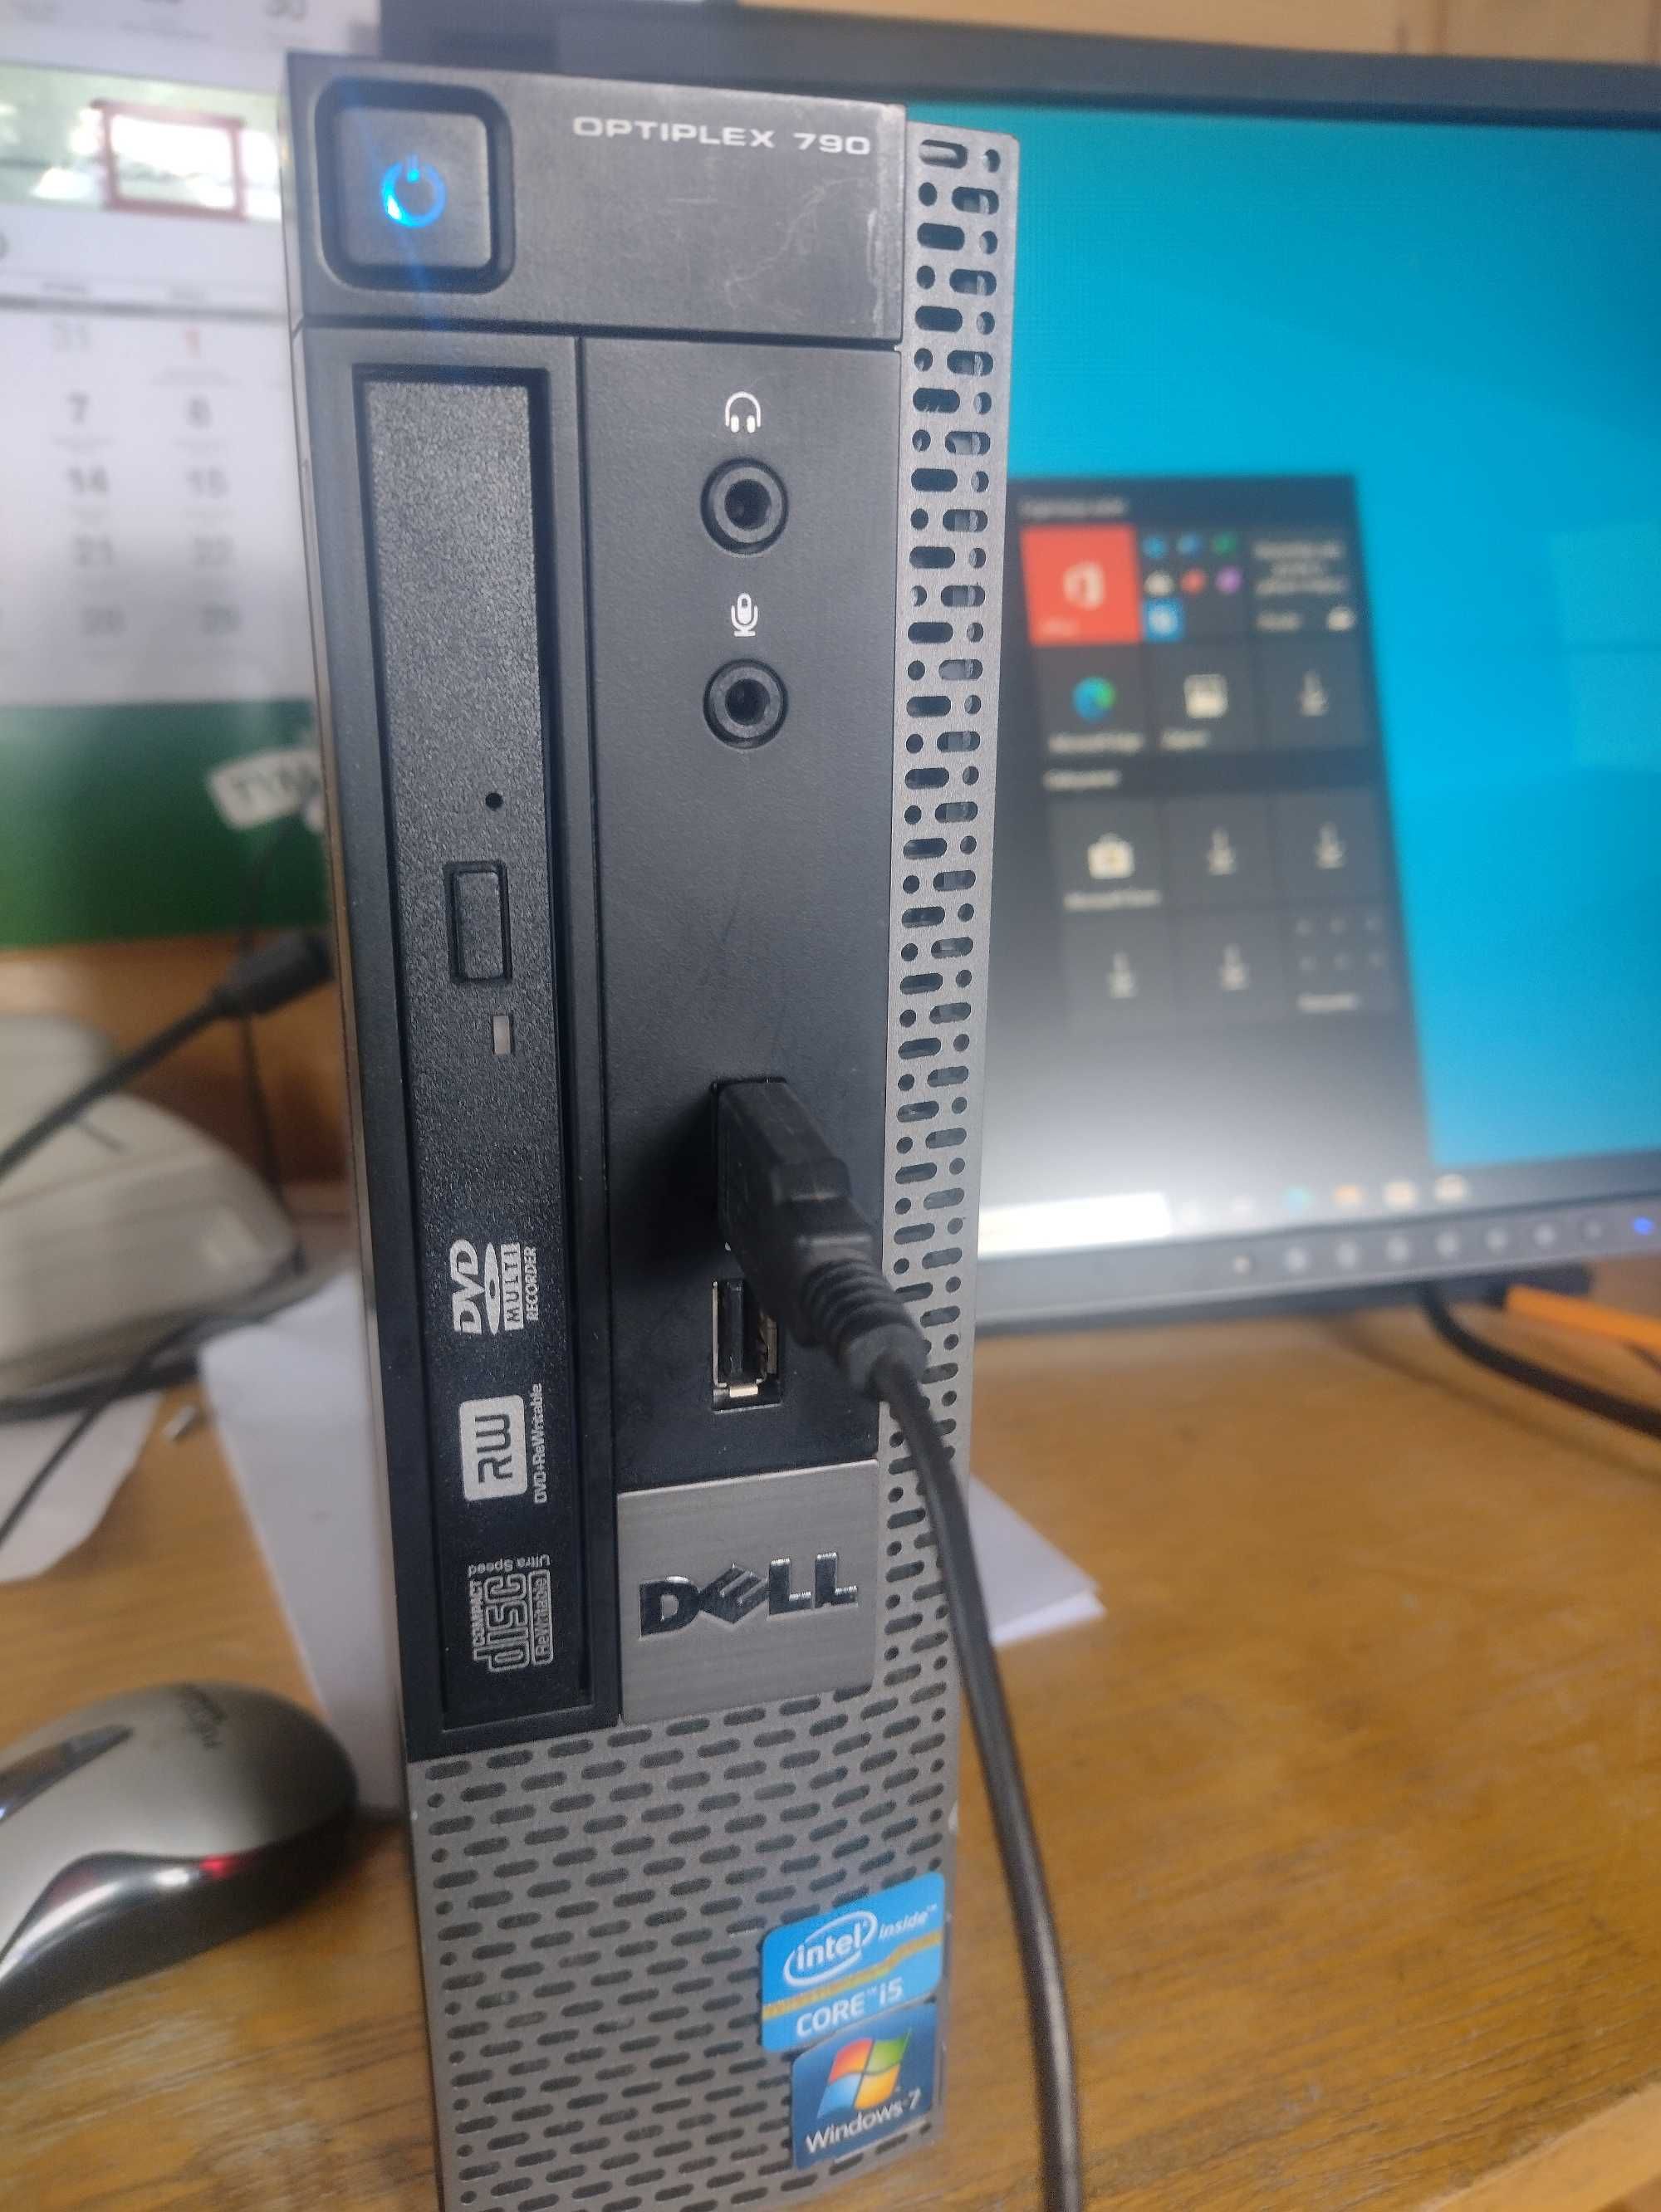 Mini PC Dell optiplex 790